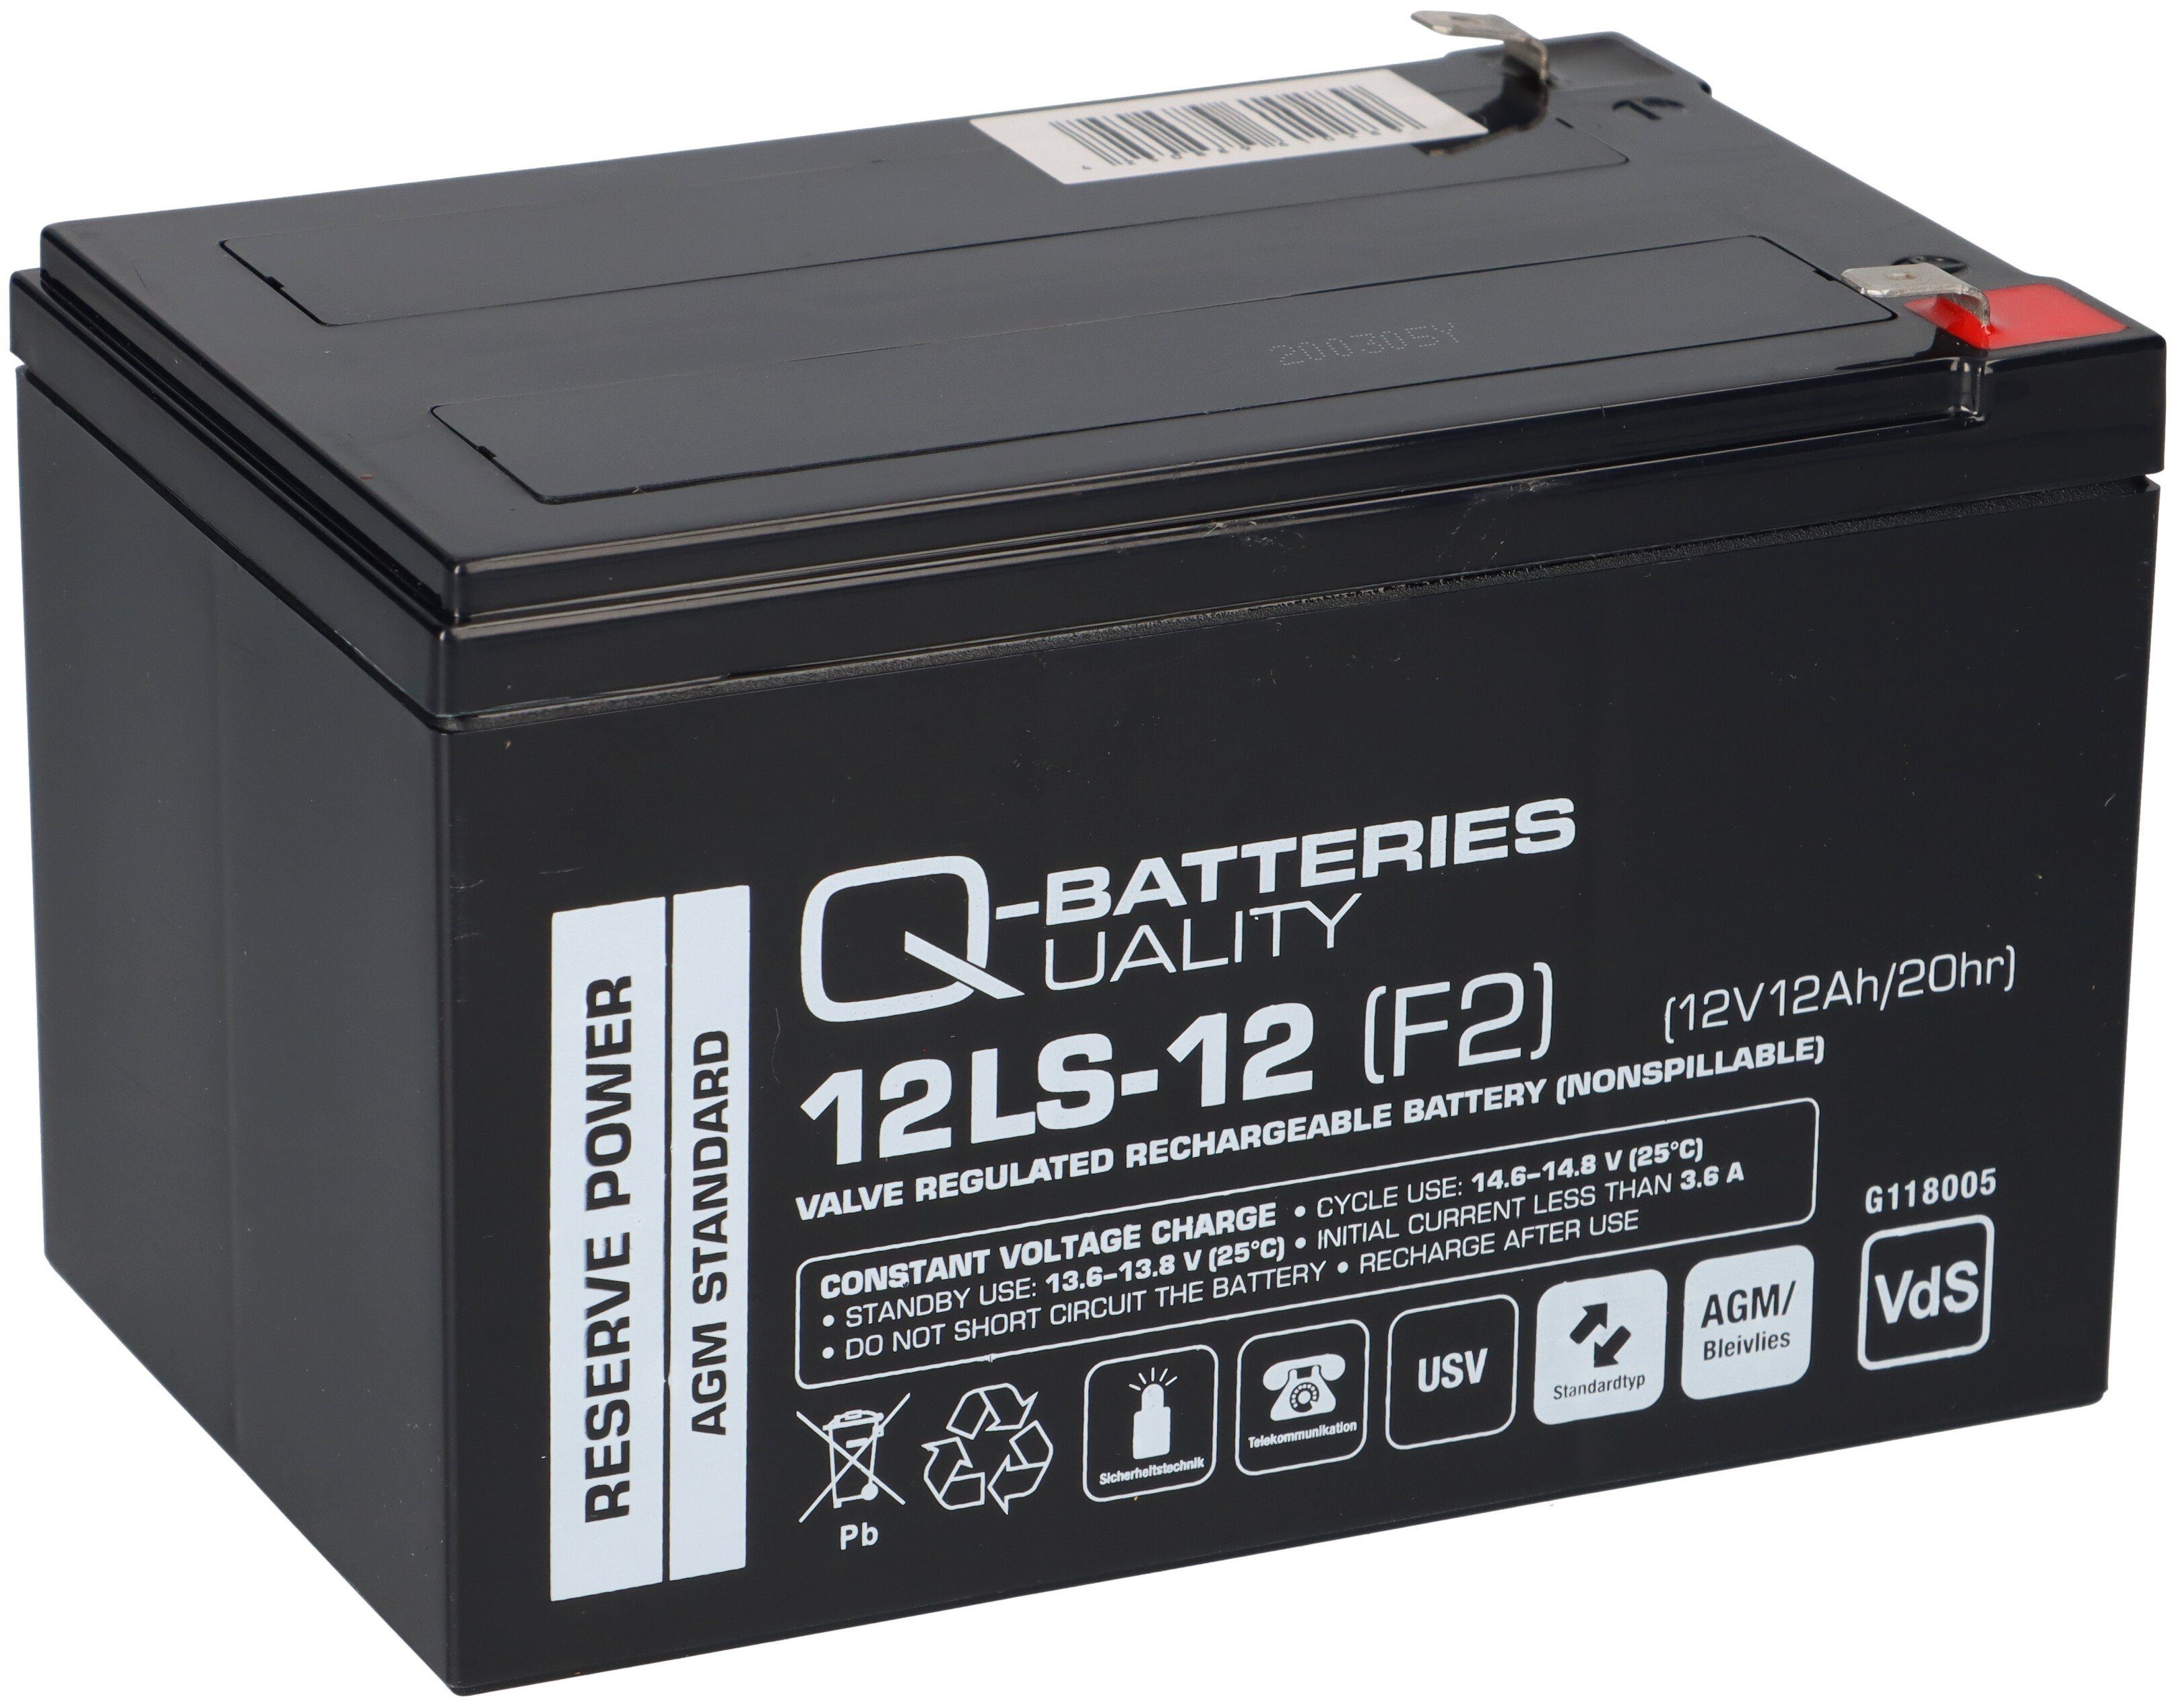 Q-Batteries Q-Batteries 12LS-12 F2 12V 12Ah Blei-Vlies-Akku / AGM VRLA mit VdS Bleiakkus